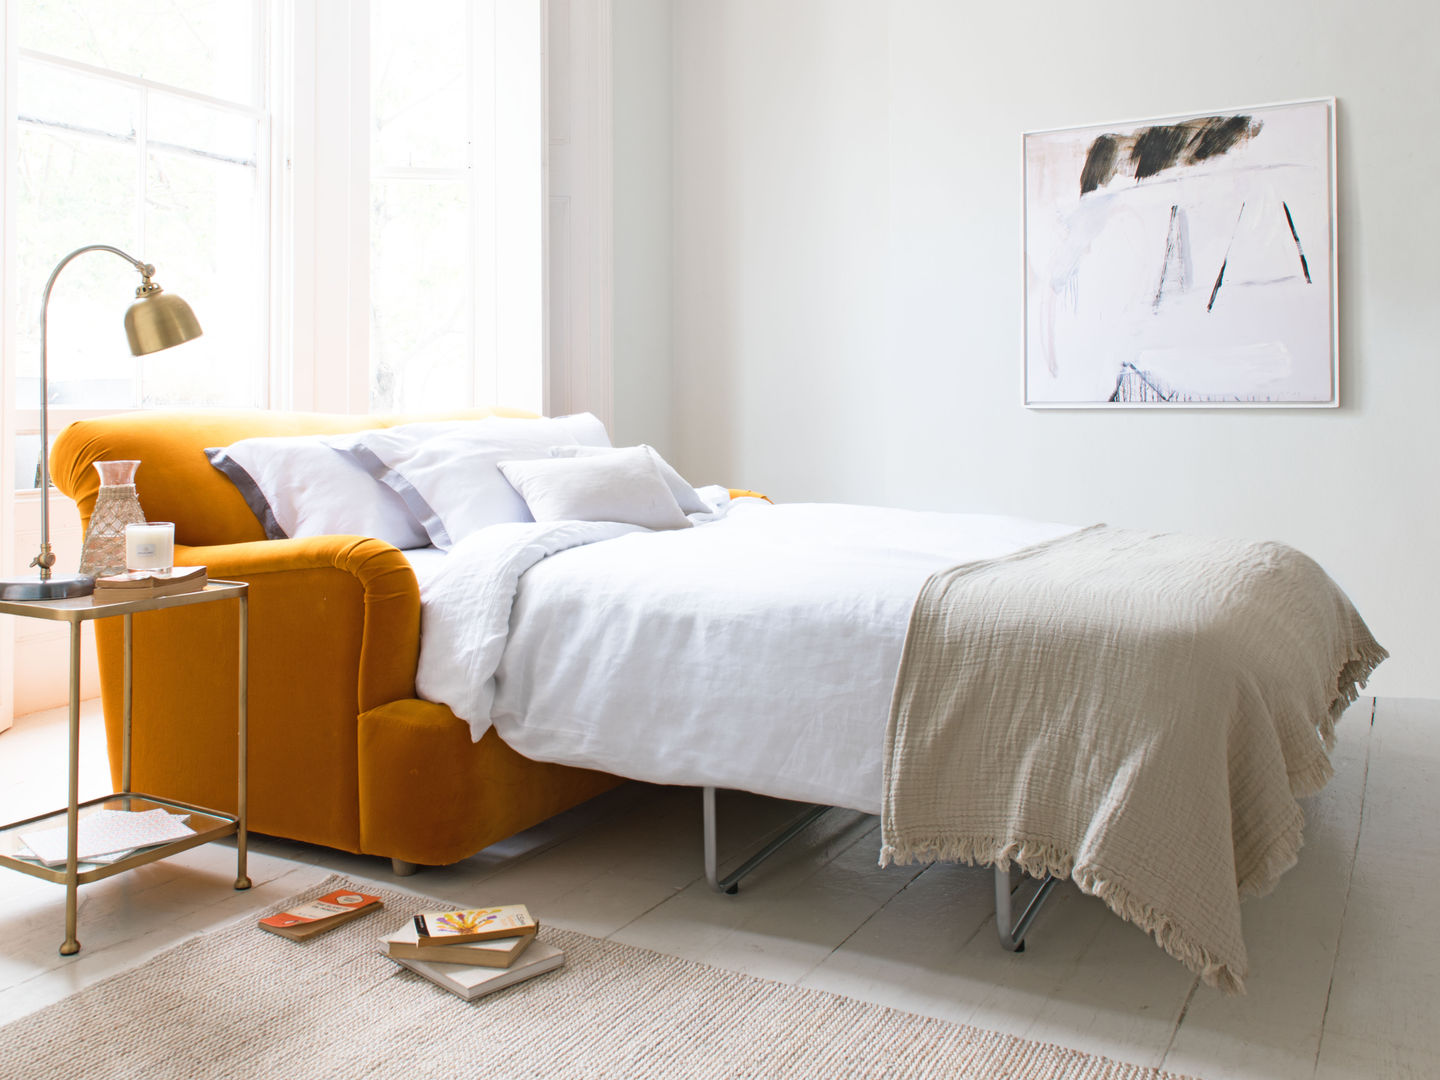 Pudding sofa bed Loaf غرفة المعيشة sofa bed,sofa,bed,new,orange,guest-bed